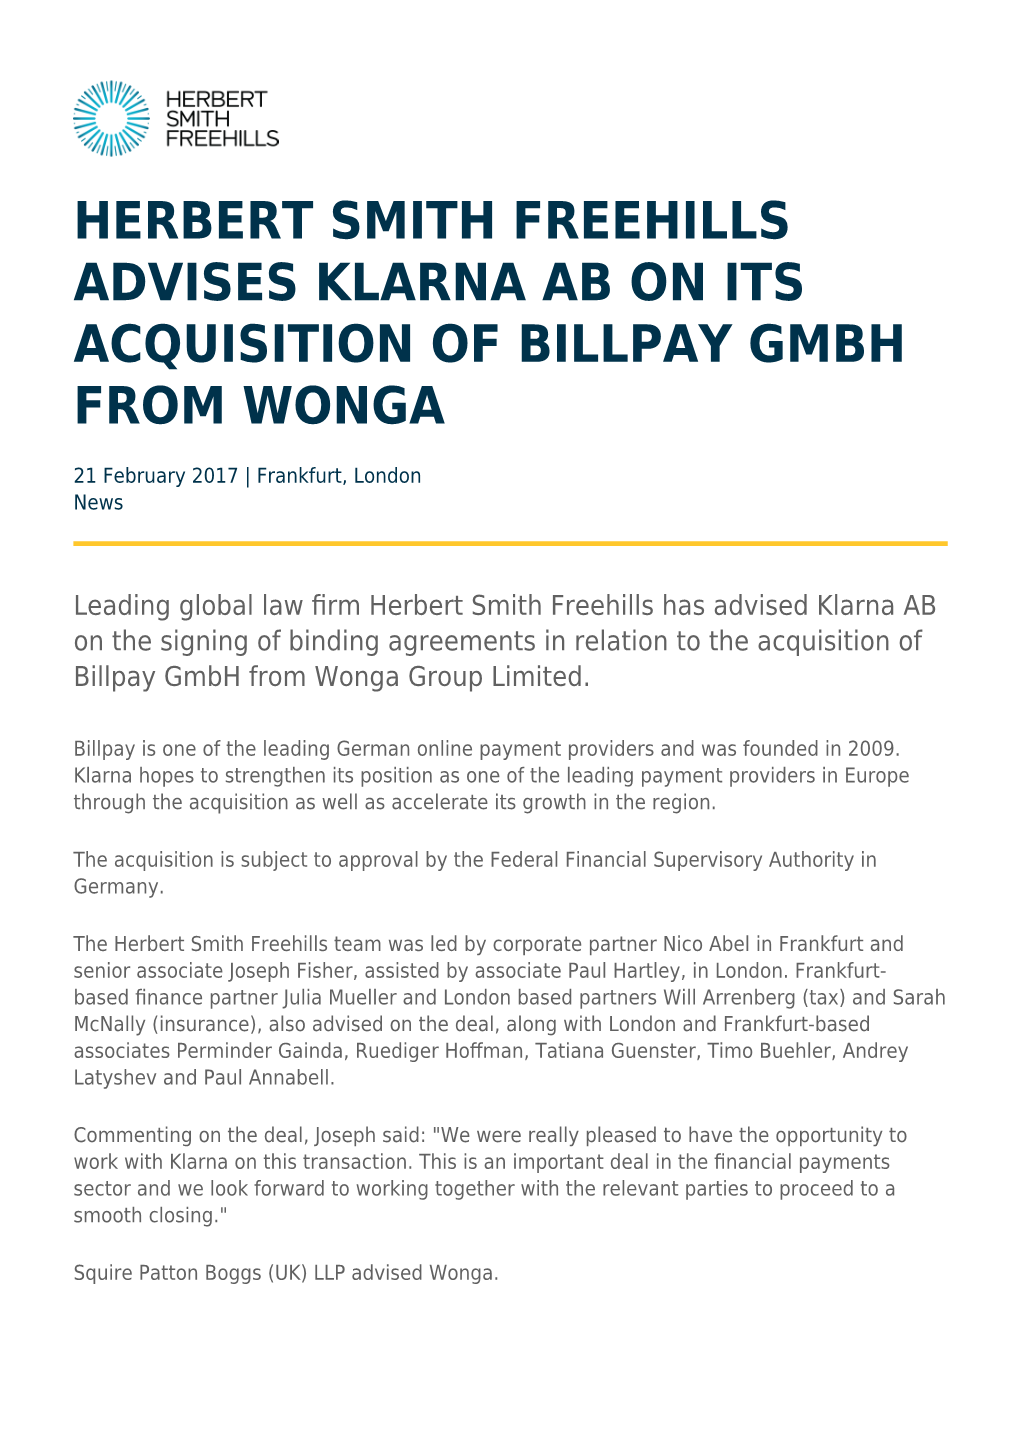 Herbert Smith Freehills Advises Klarna Ab on Its Acquisition of Billpay Gmbh from Wonga